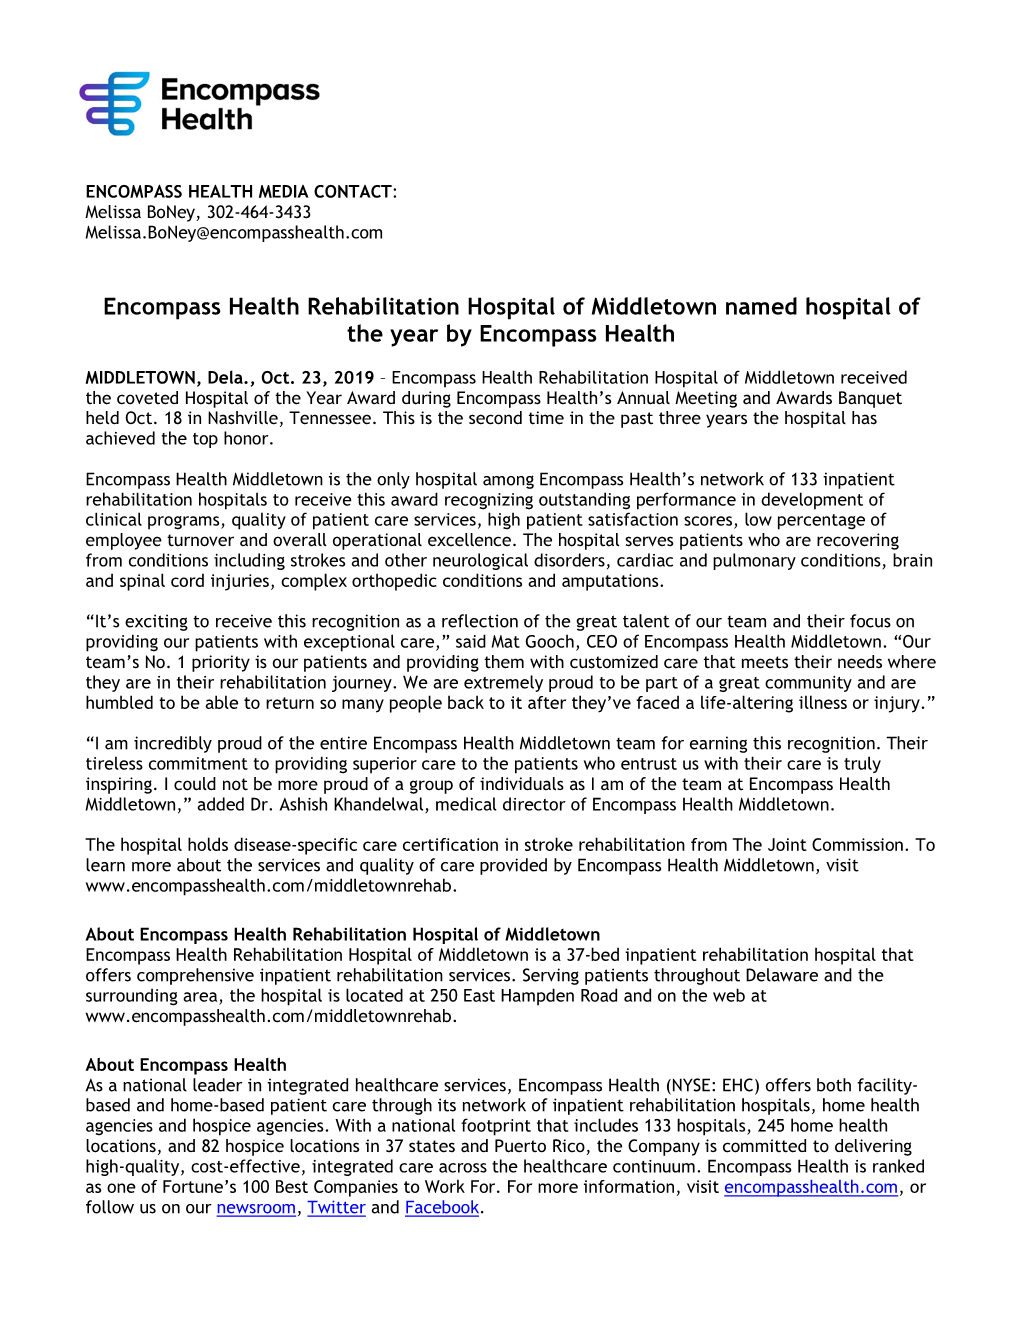 Encompass Health Rehabilitation Hospital of Middletown Named Hospital of the Year by Encompass Health